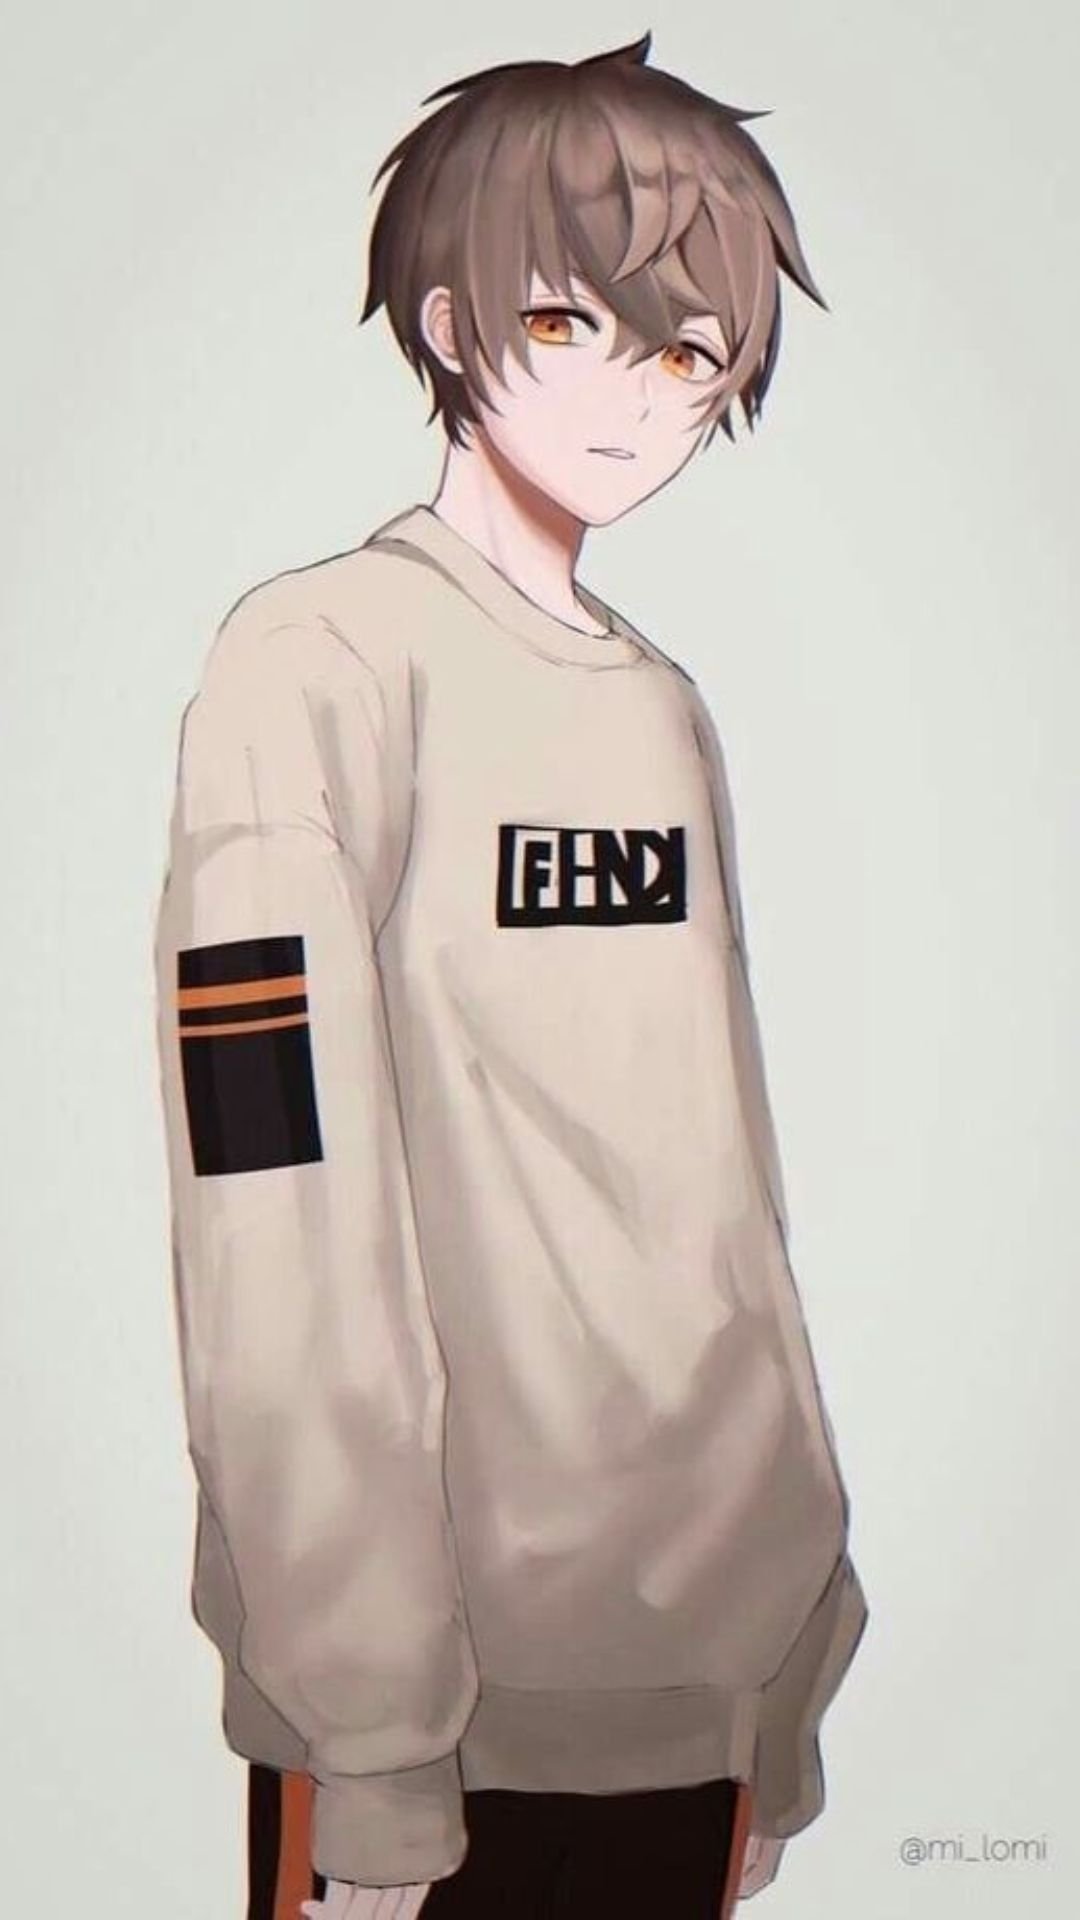 18+] Cute Anime Boy Wallpapers - WallpaperSafari